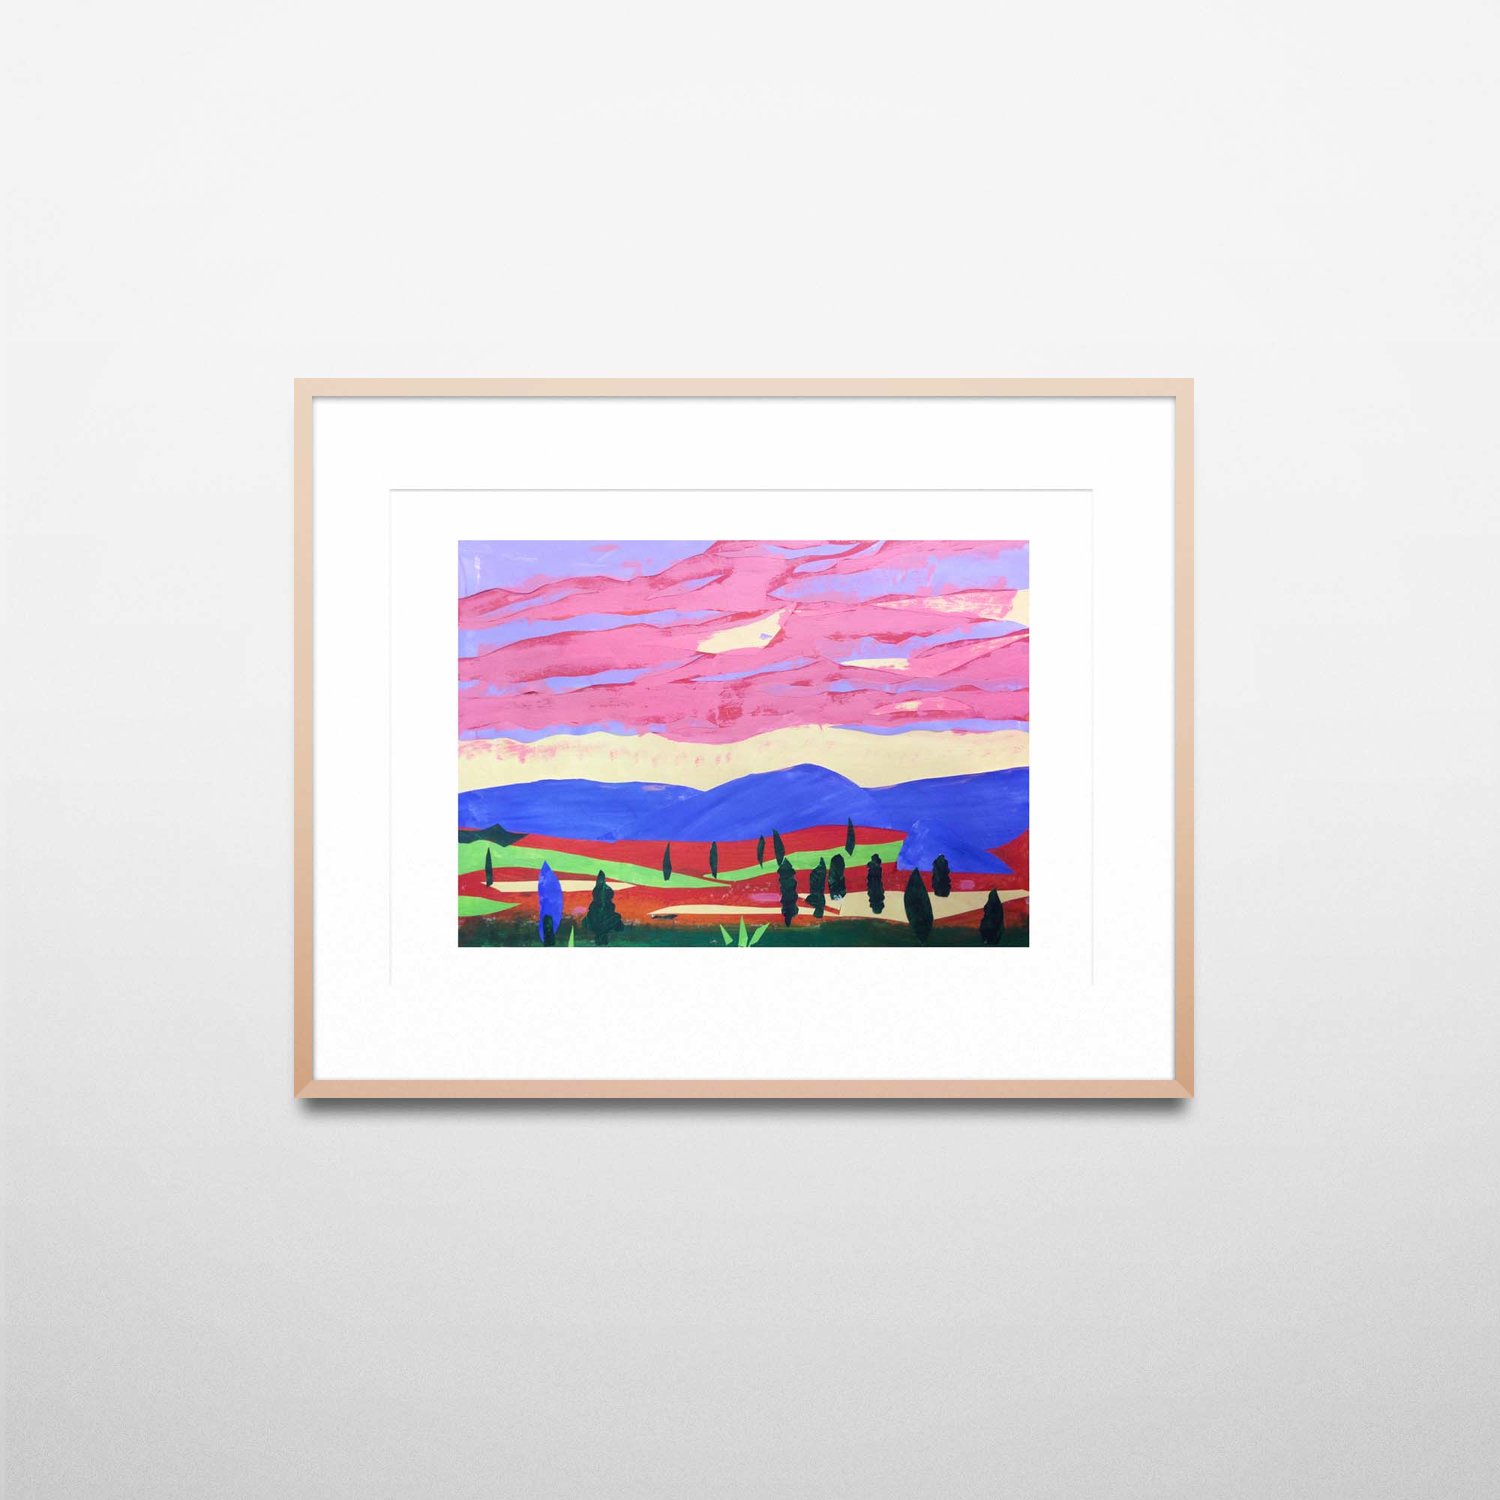 Landscape with pink sky by Richard